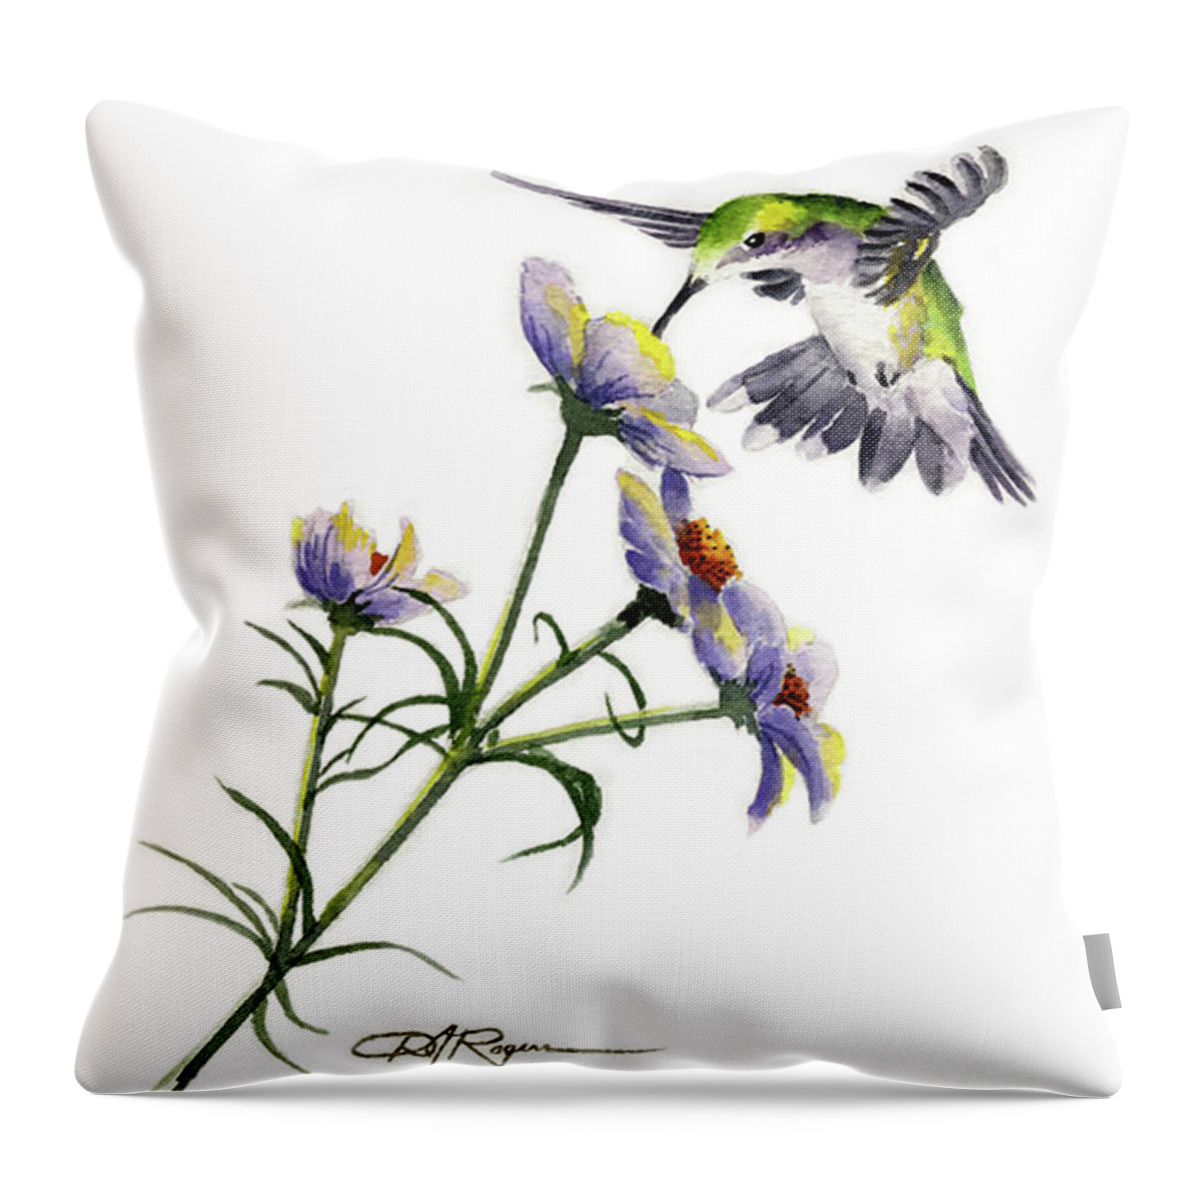 Hummingbird Throw Pillow featuring the painting Hummingbird #1 by David Rogers